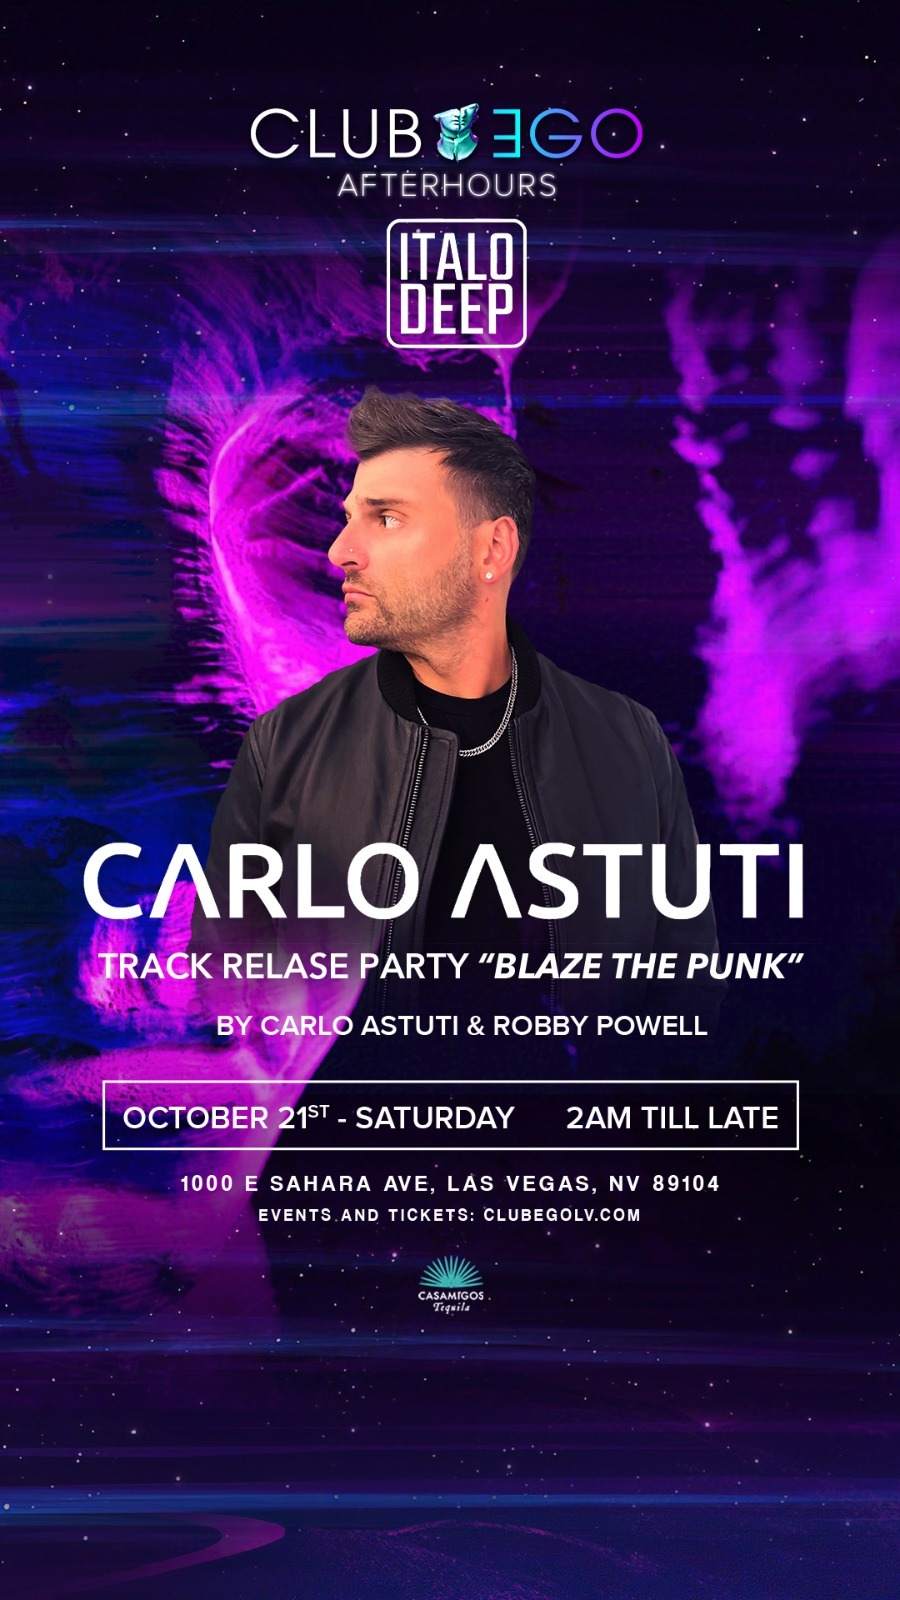 Club Ego Las Vegas presents Carlo Astuti (Italo Deep) - フライヤー裏